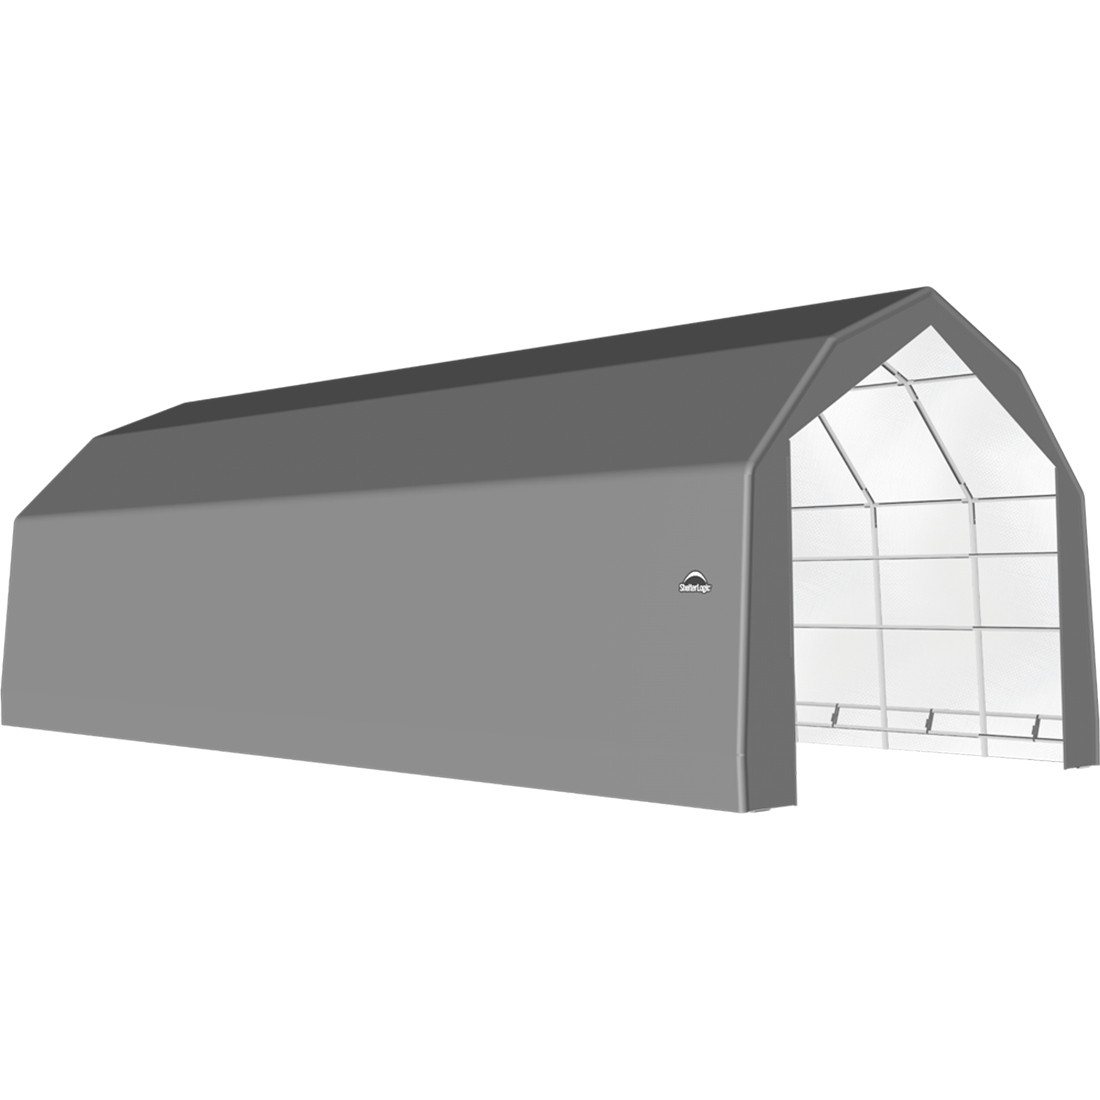 ShelterTech SP Series Barn Shelter, 20 ft. x 48 ft. x 15 ft. Heavy Duty PVC 14.5 oz. Gray